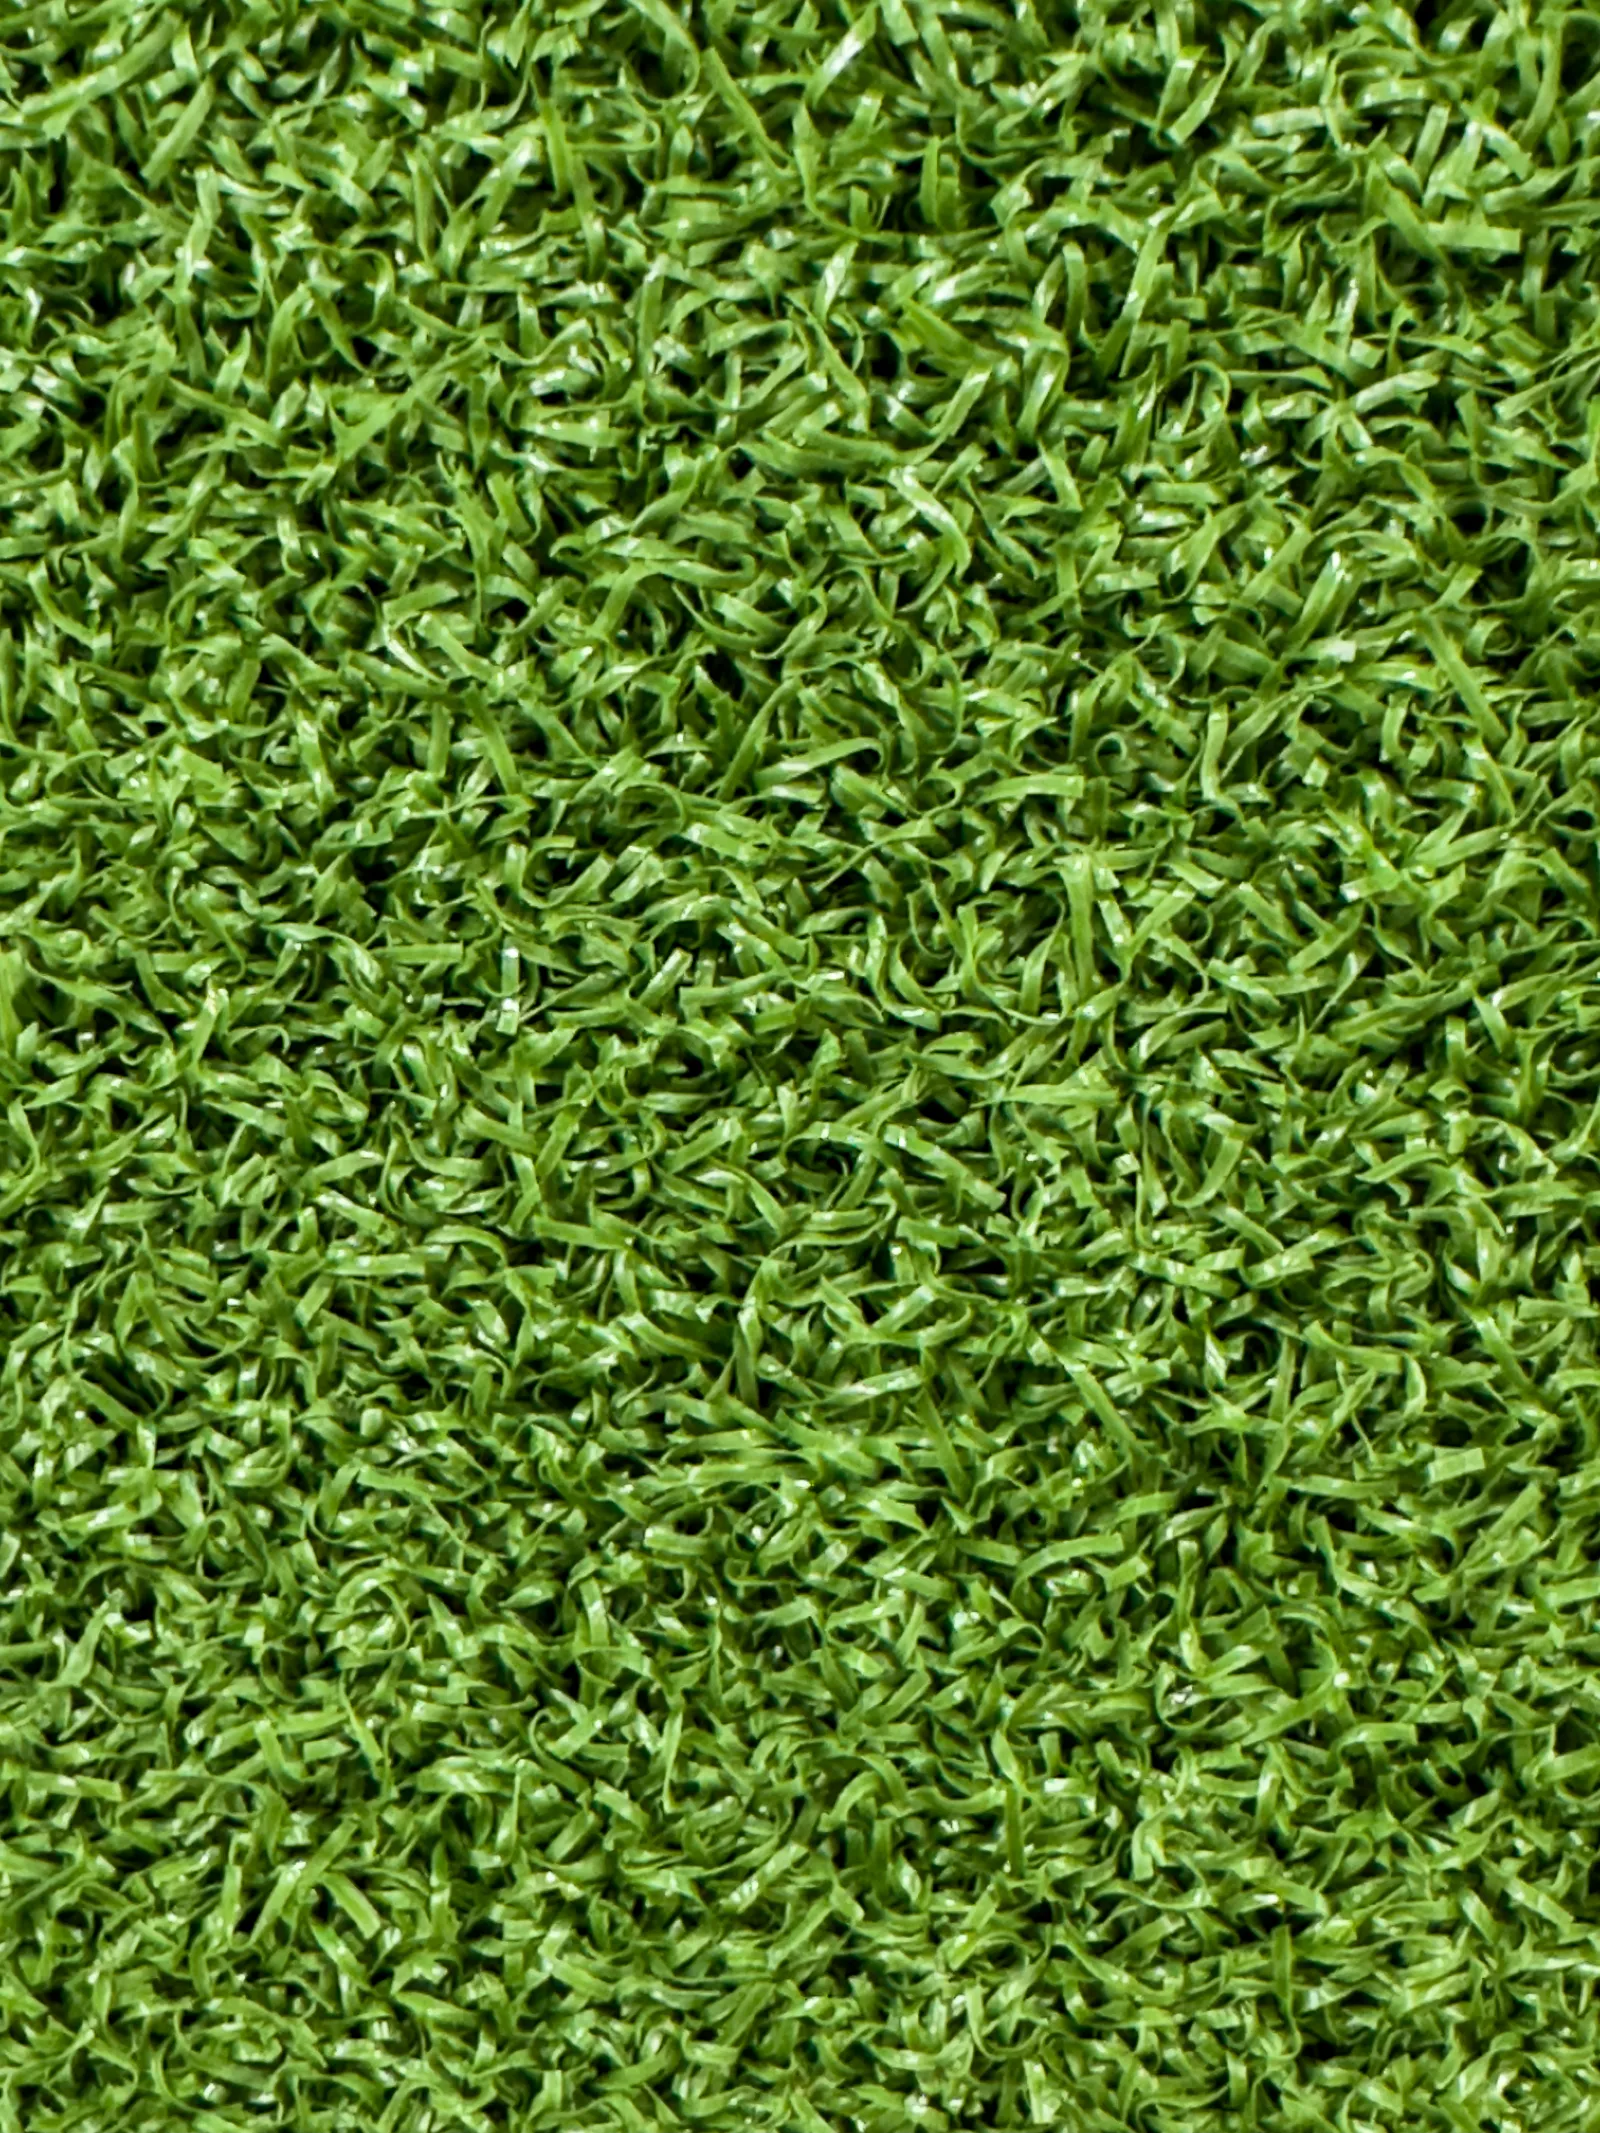 a close up of some grass